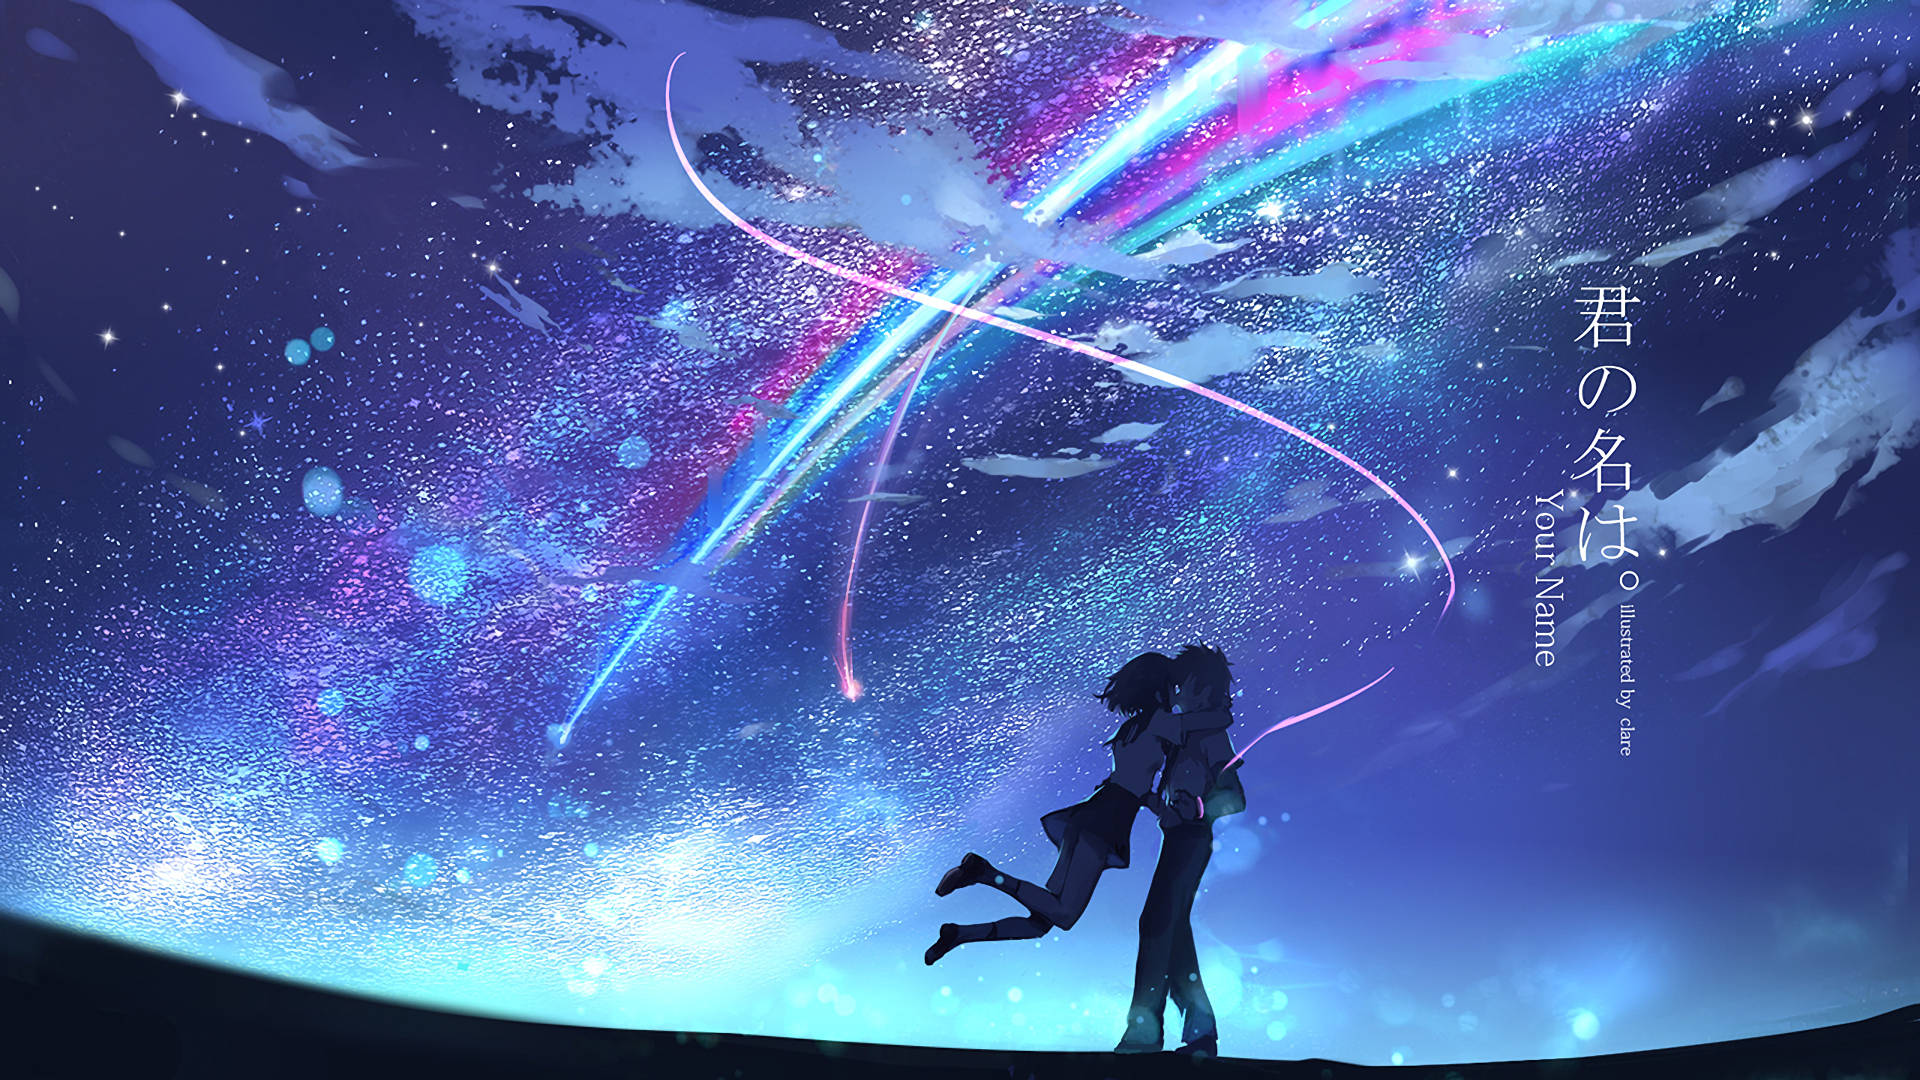 Your Name Anime 2016 Comet Illustration Wallpaper